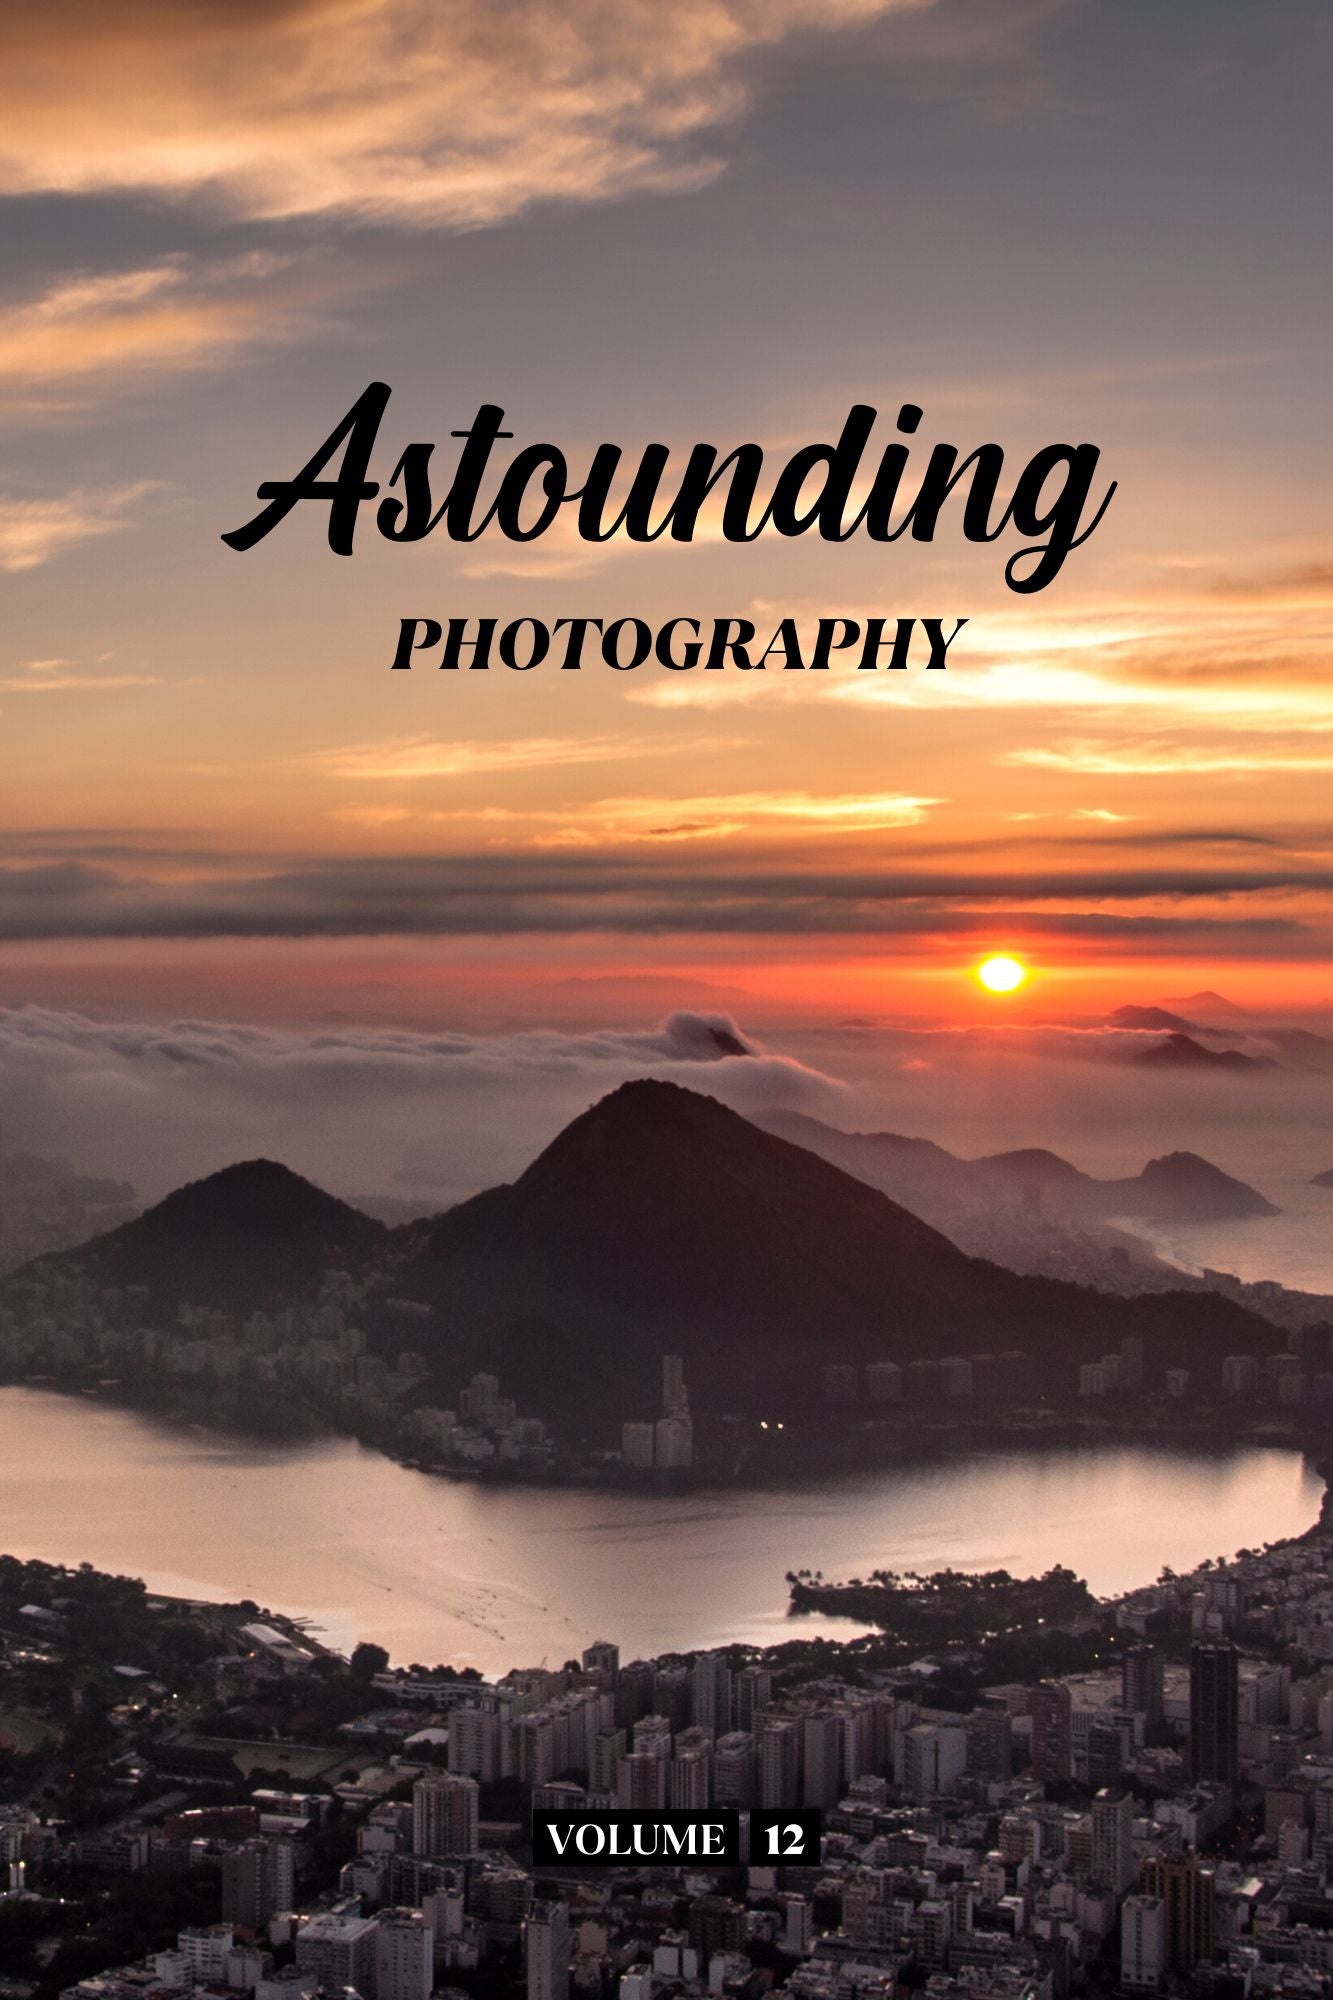 Astounding Photography Volume 12 (Physical Book)